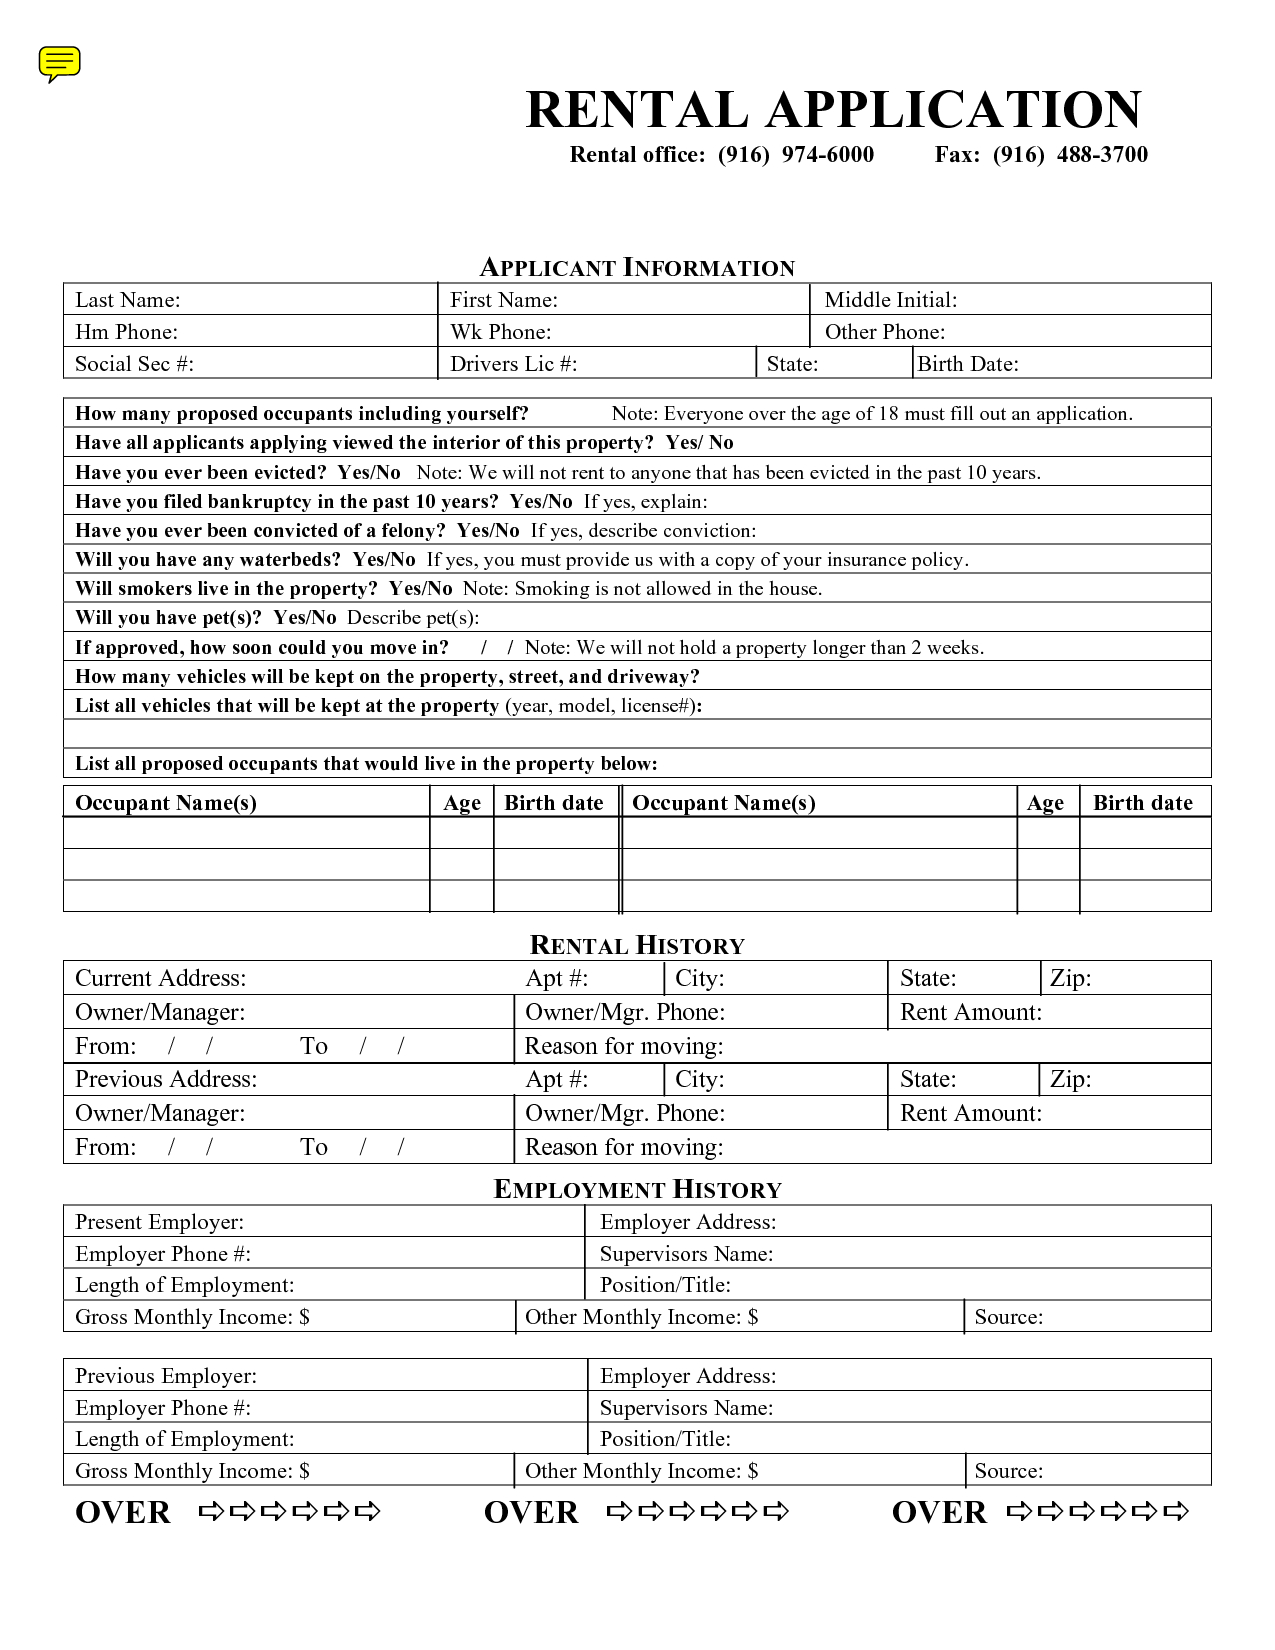 Free Rental Application Formmary_Jmenintigar - House Rental - Free Printable Landlord Forms